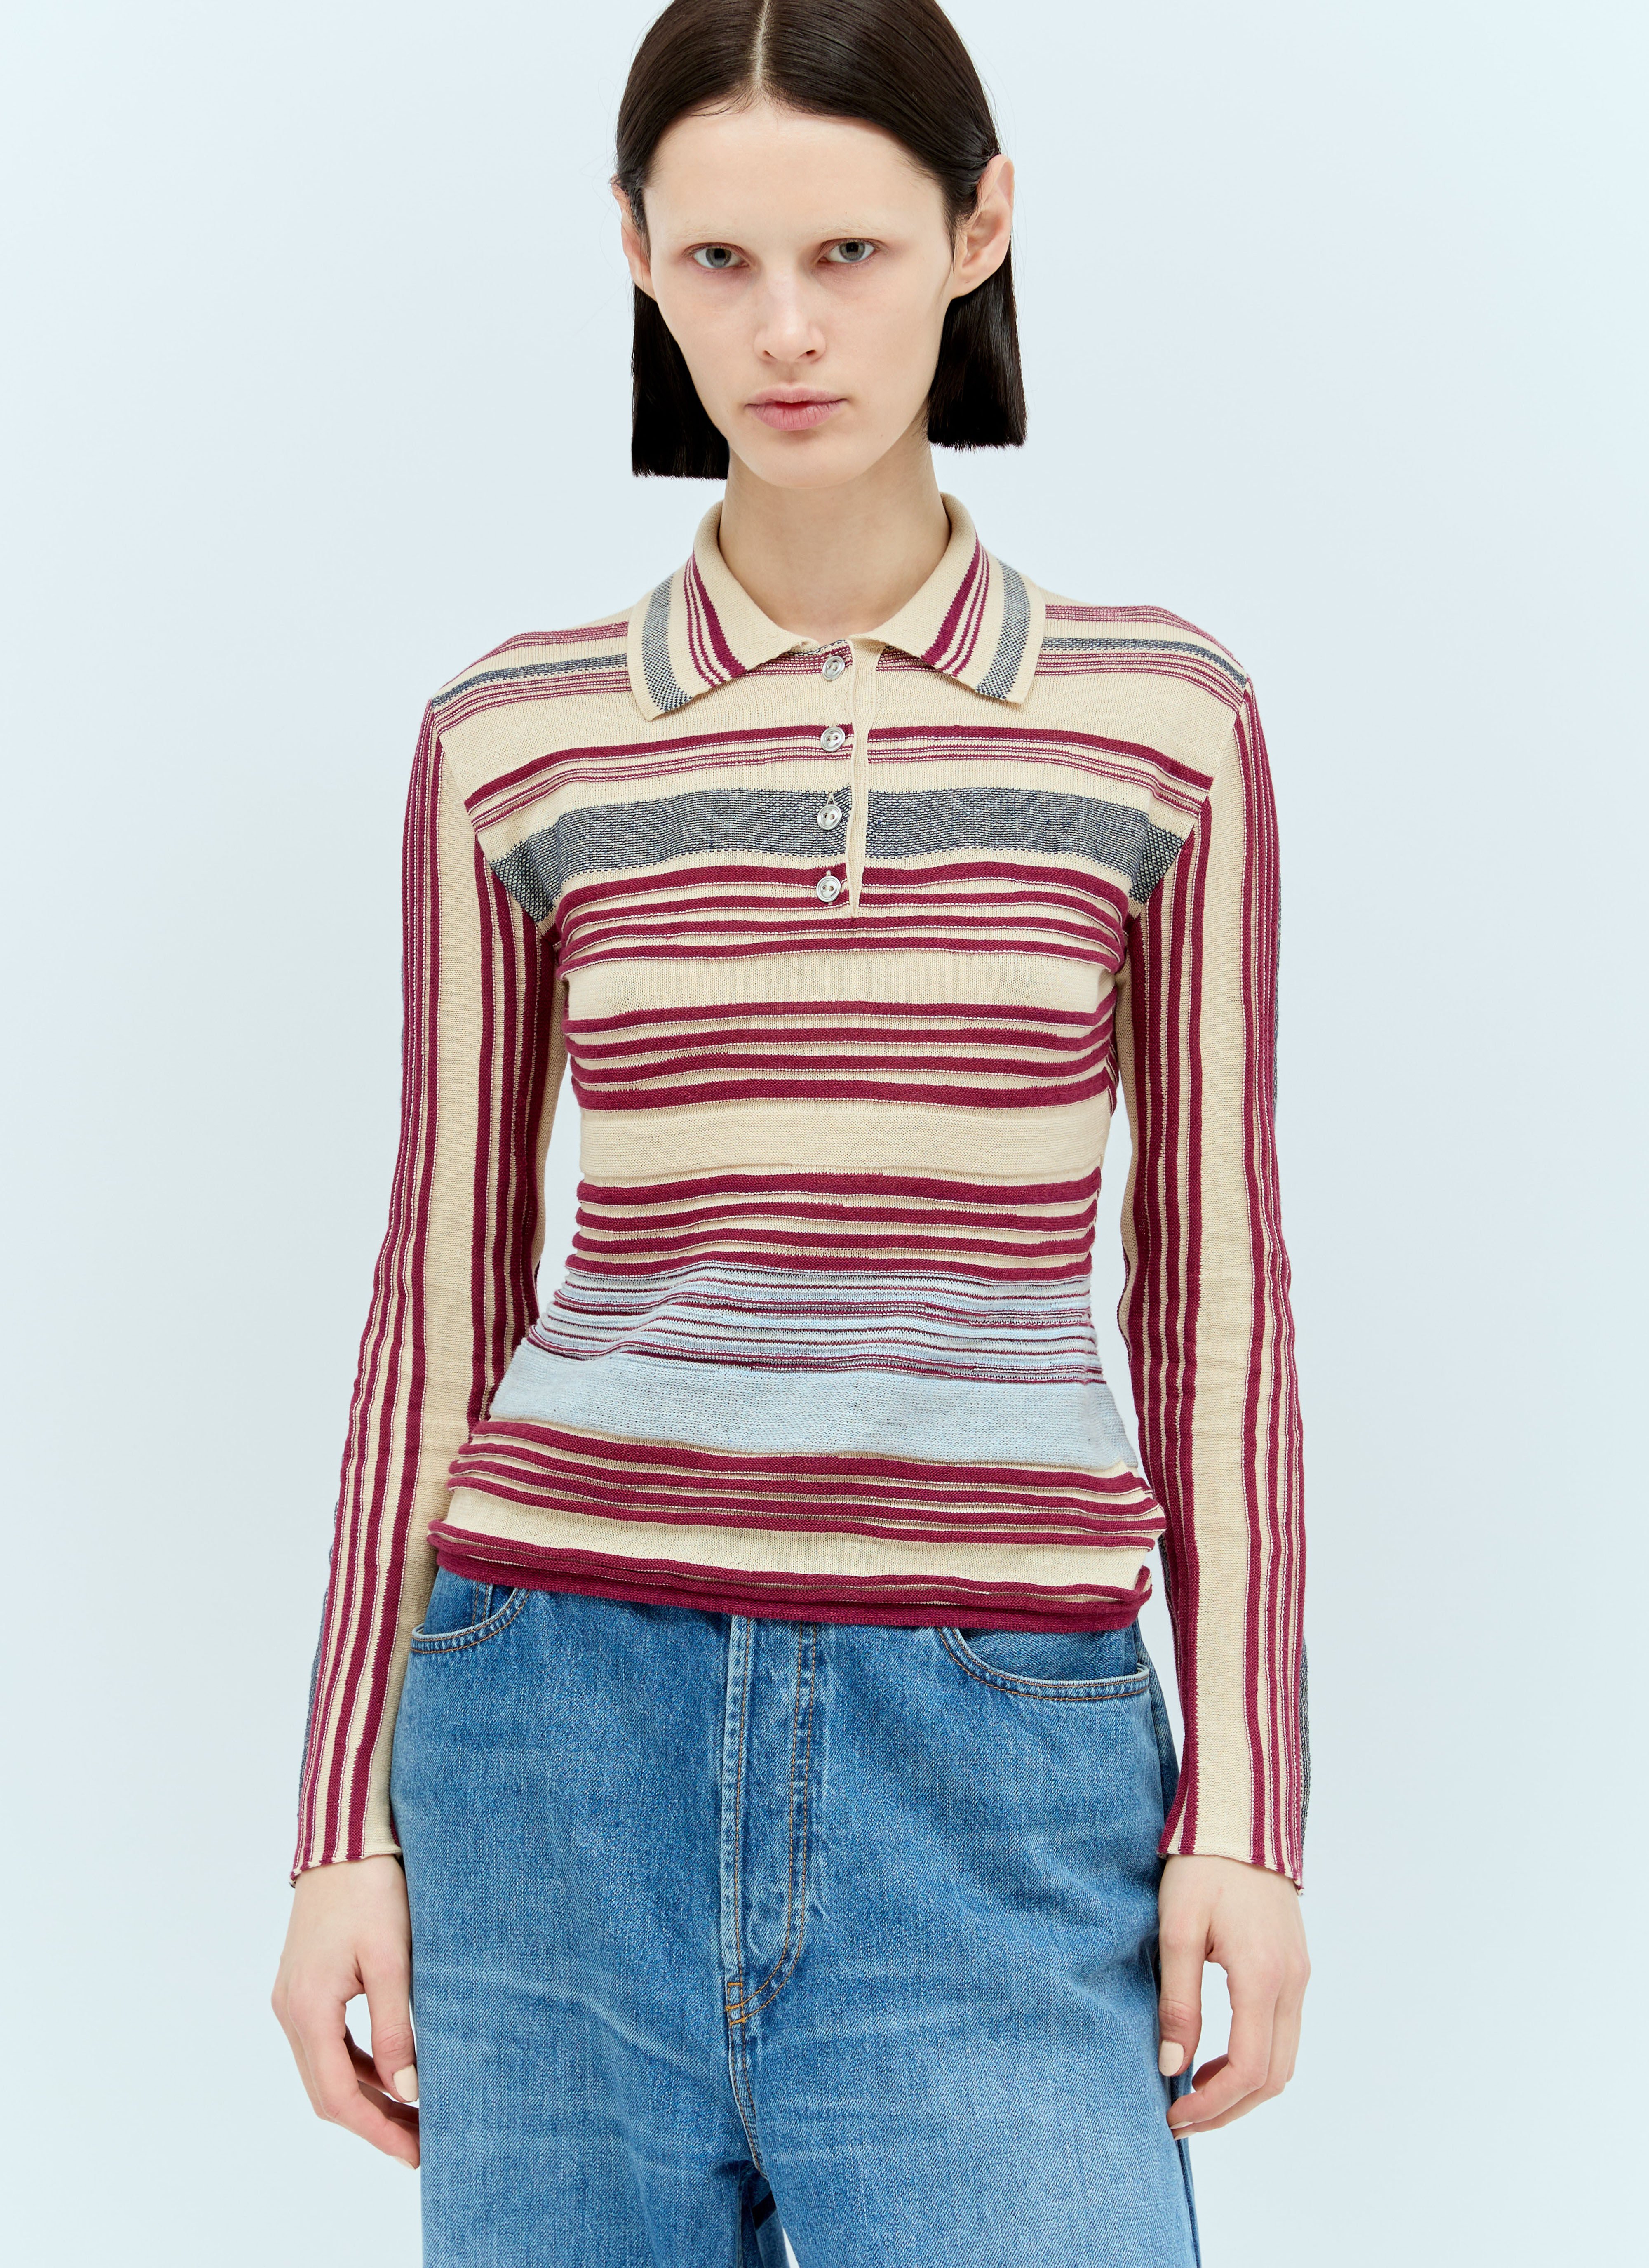 Jean Paul Gaultier x Shayne Oliver Striped Knit Sweater Brown jps0257003